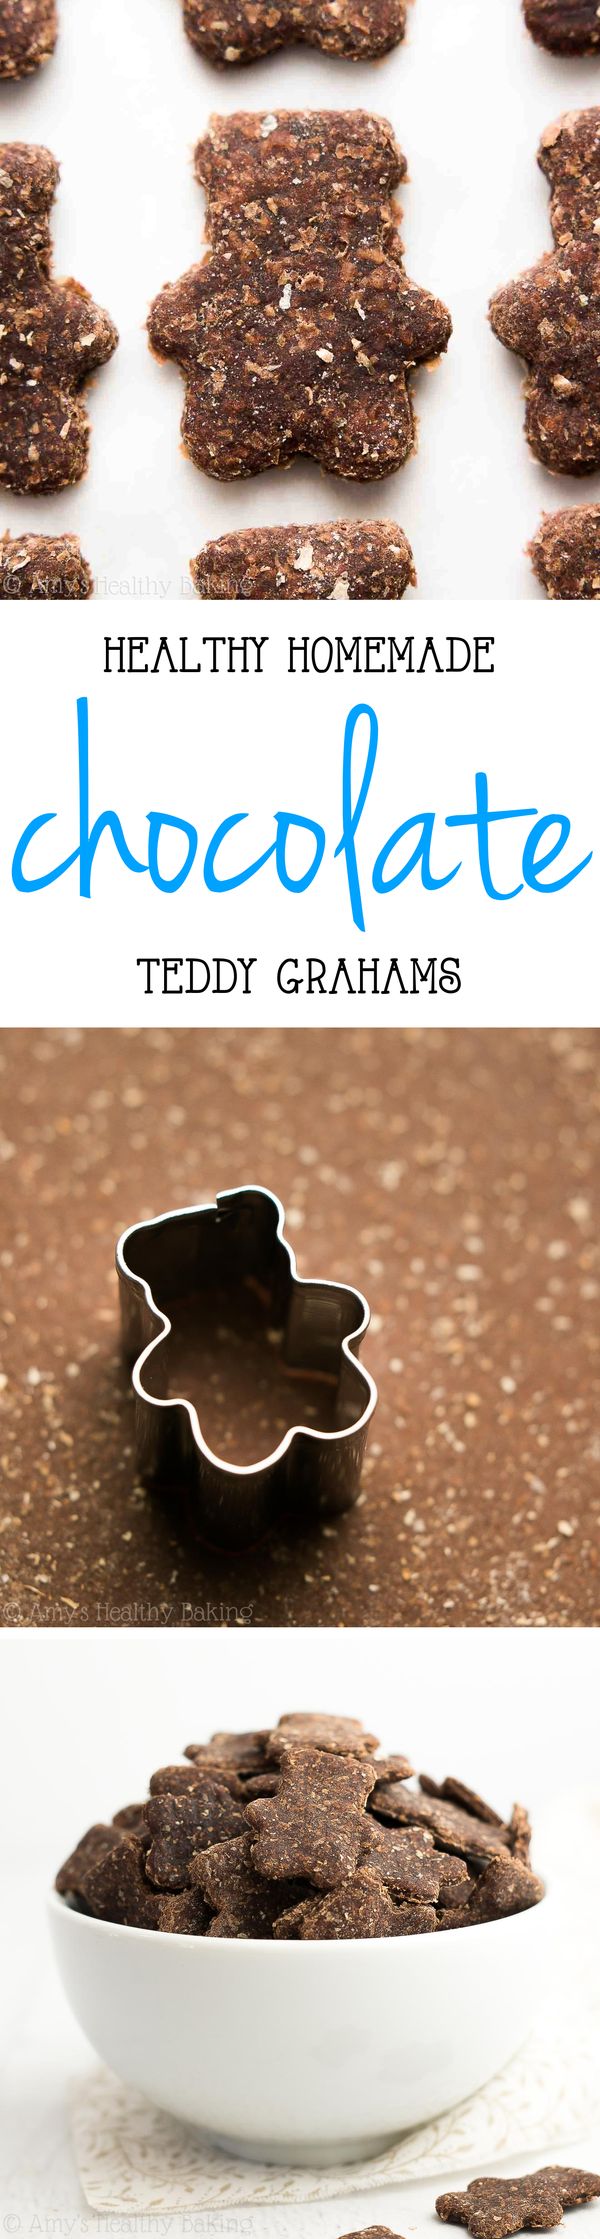 Healthy Homemade Chocolate Teddy Grahams